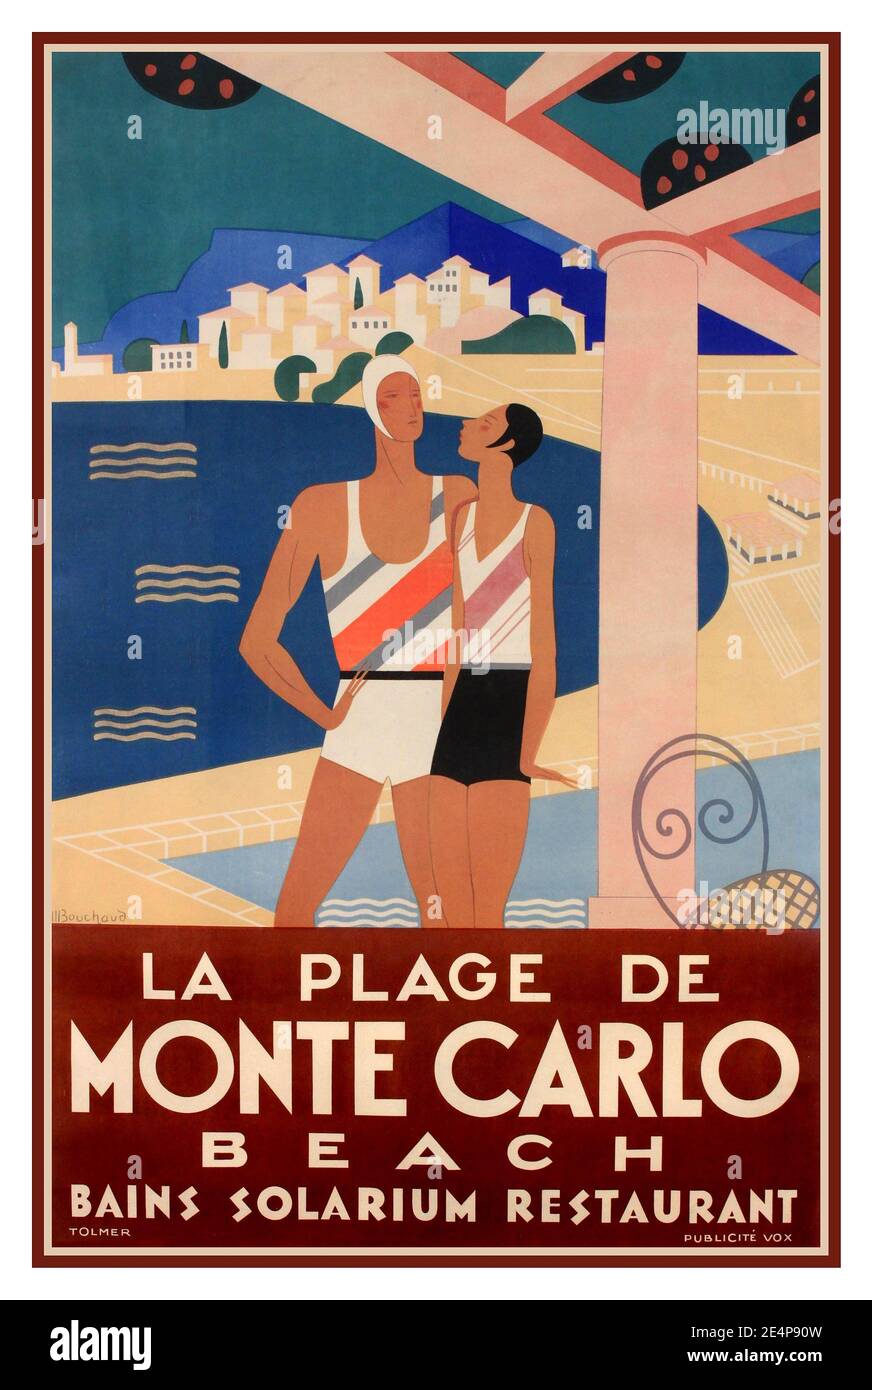 Monte Carlo 1930's Vintage Travel Poster Michel Bouchaud (1902-1965) 'La Plage de Monte Carlo', BEACH BAINS SOLARIUM RESTAURANT poster printed by Tolmer Publicite Vox 1930 Stock Photo